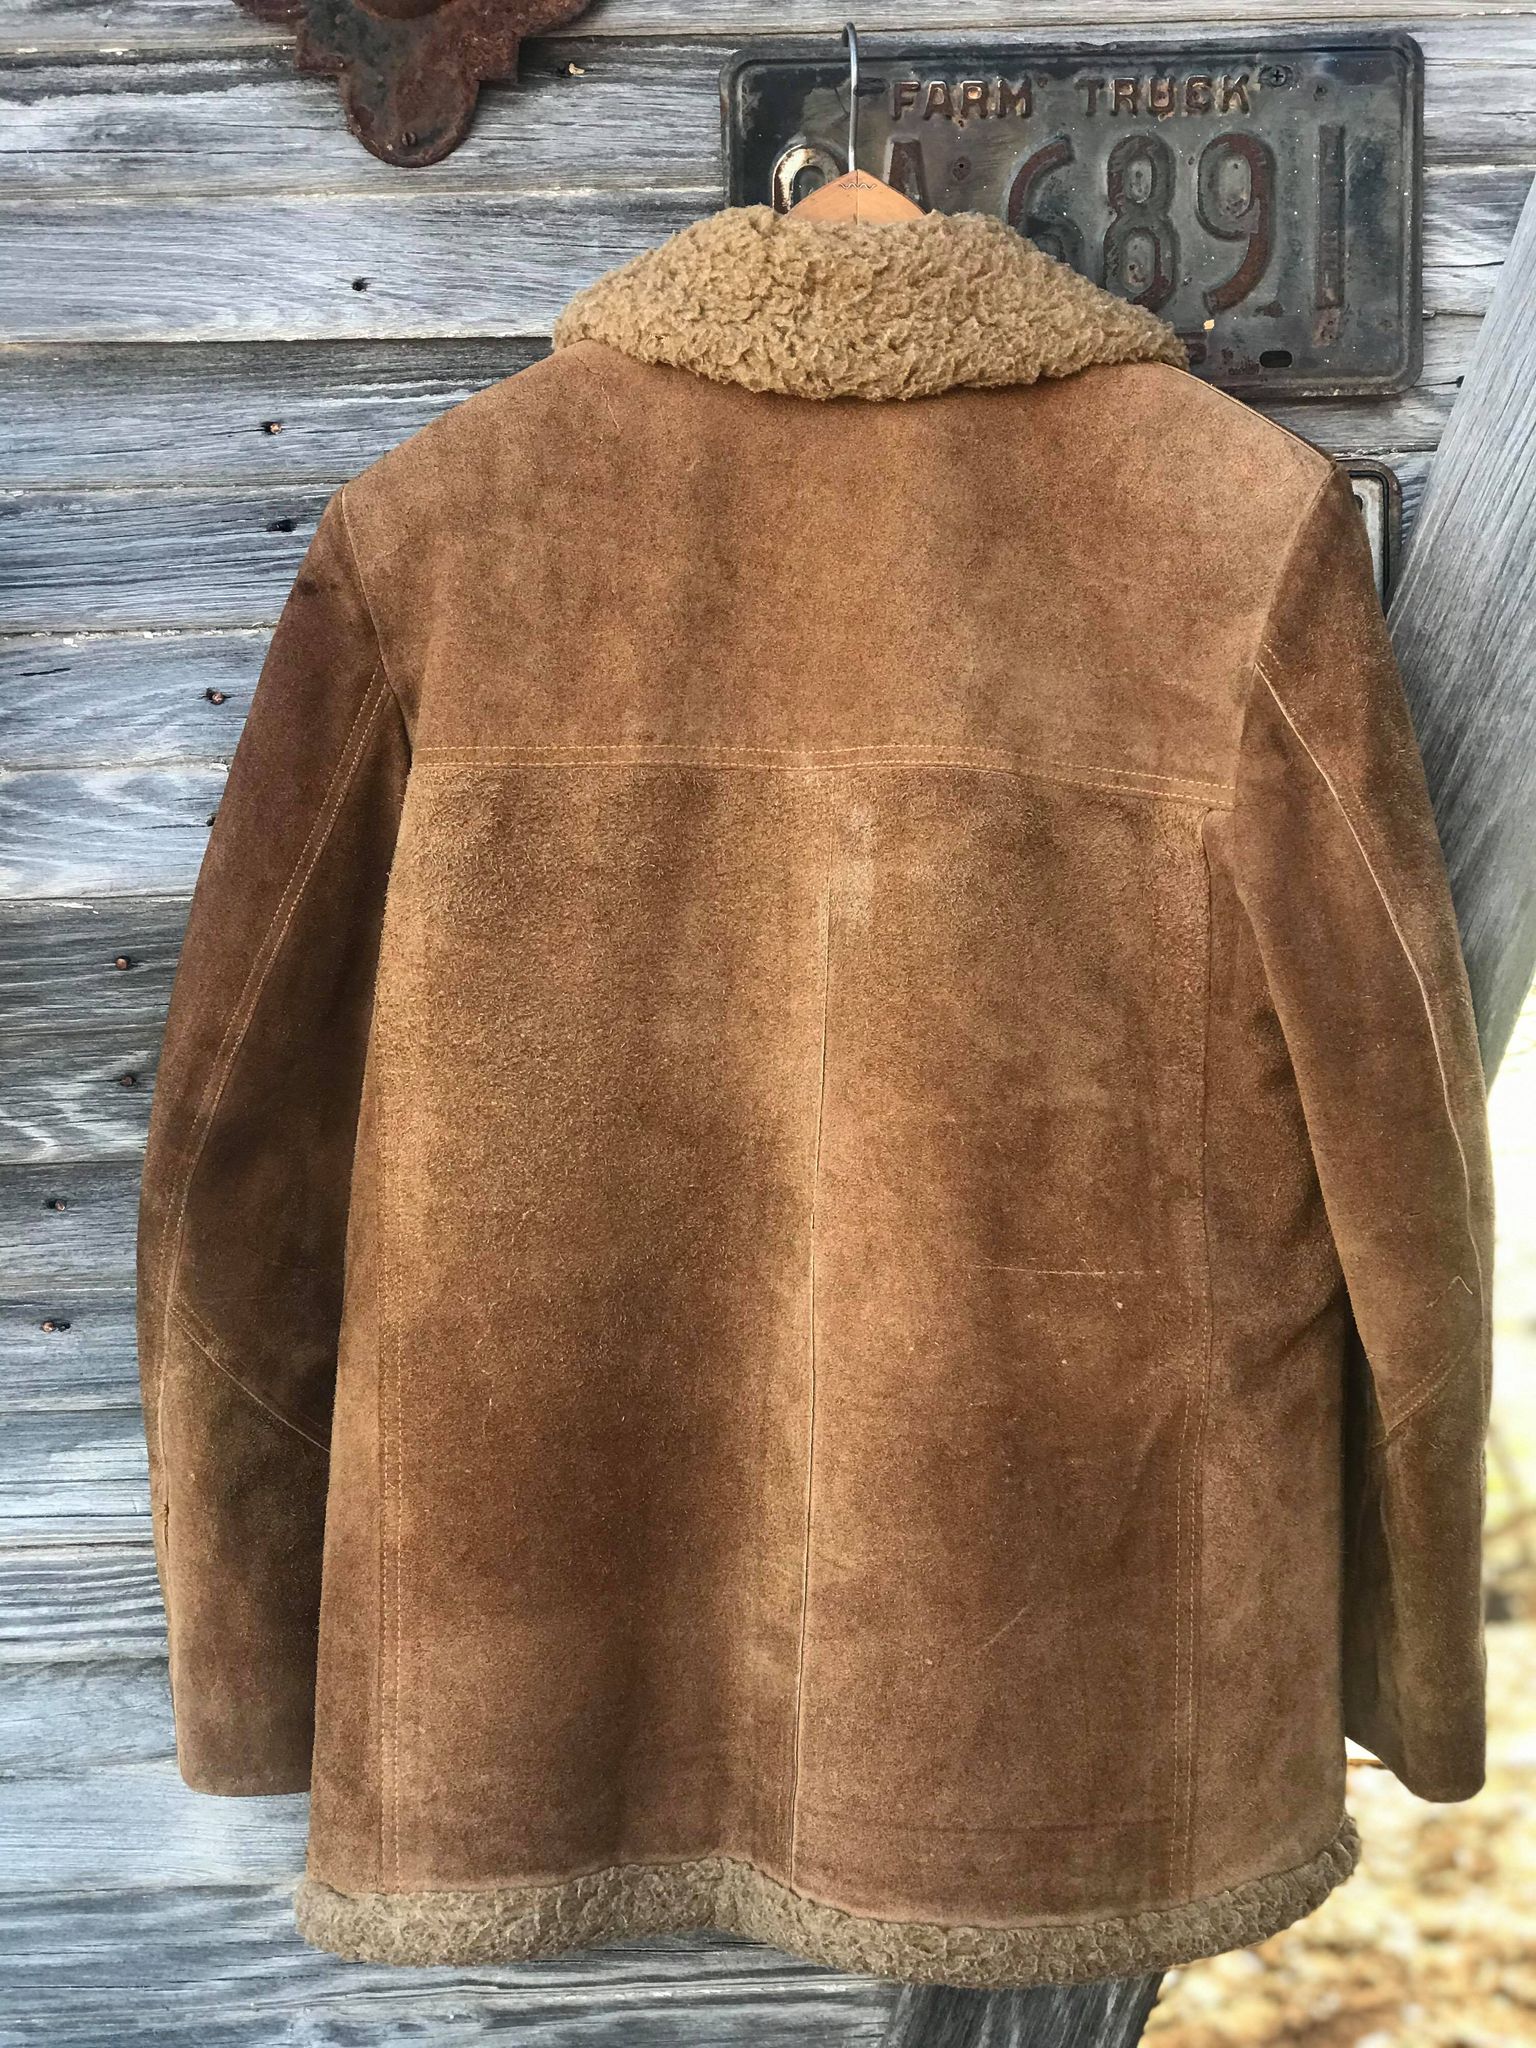 Vintage Leather Barn Coat